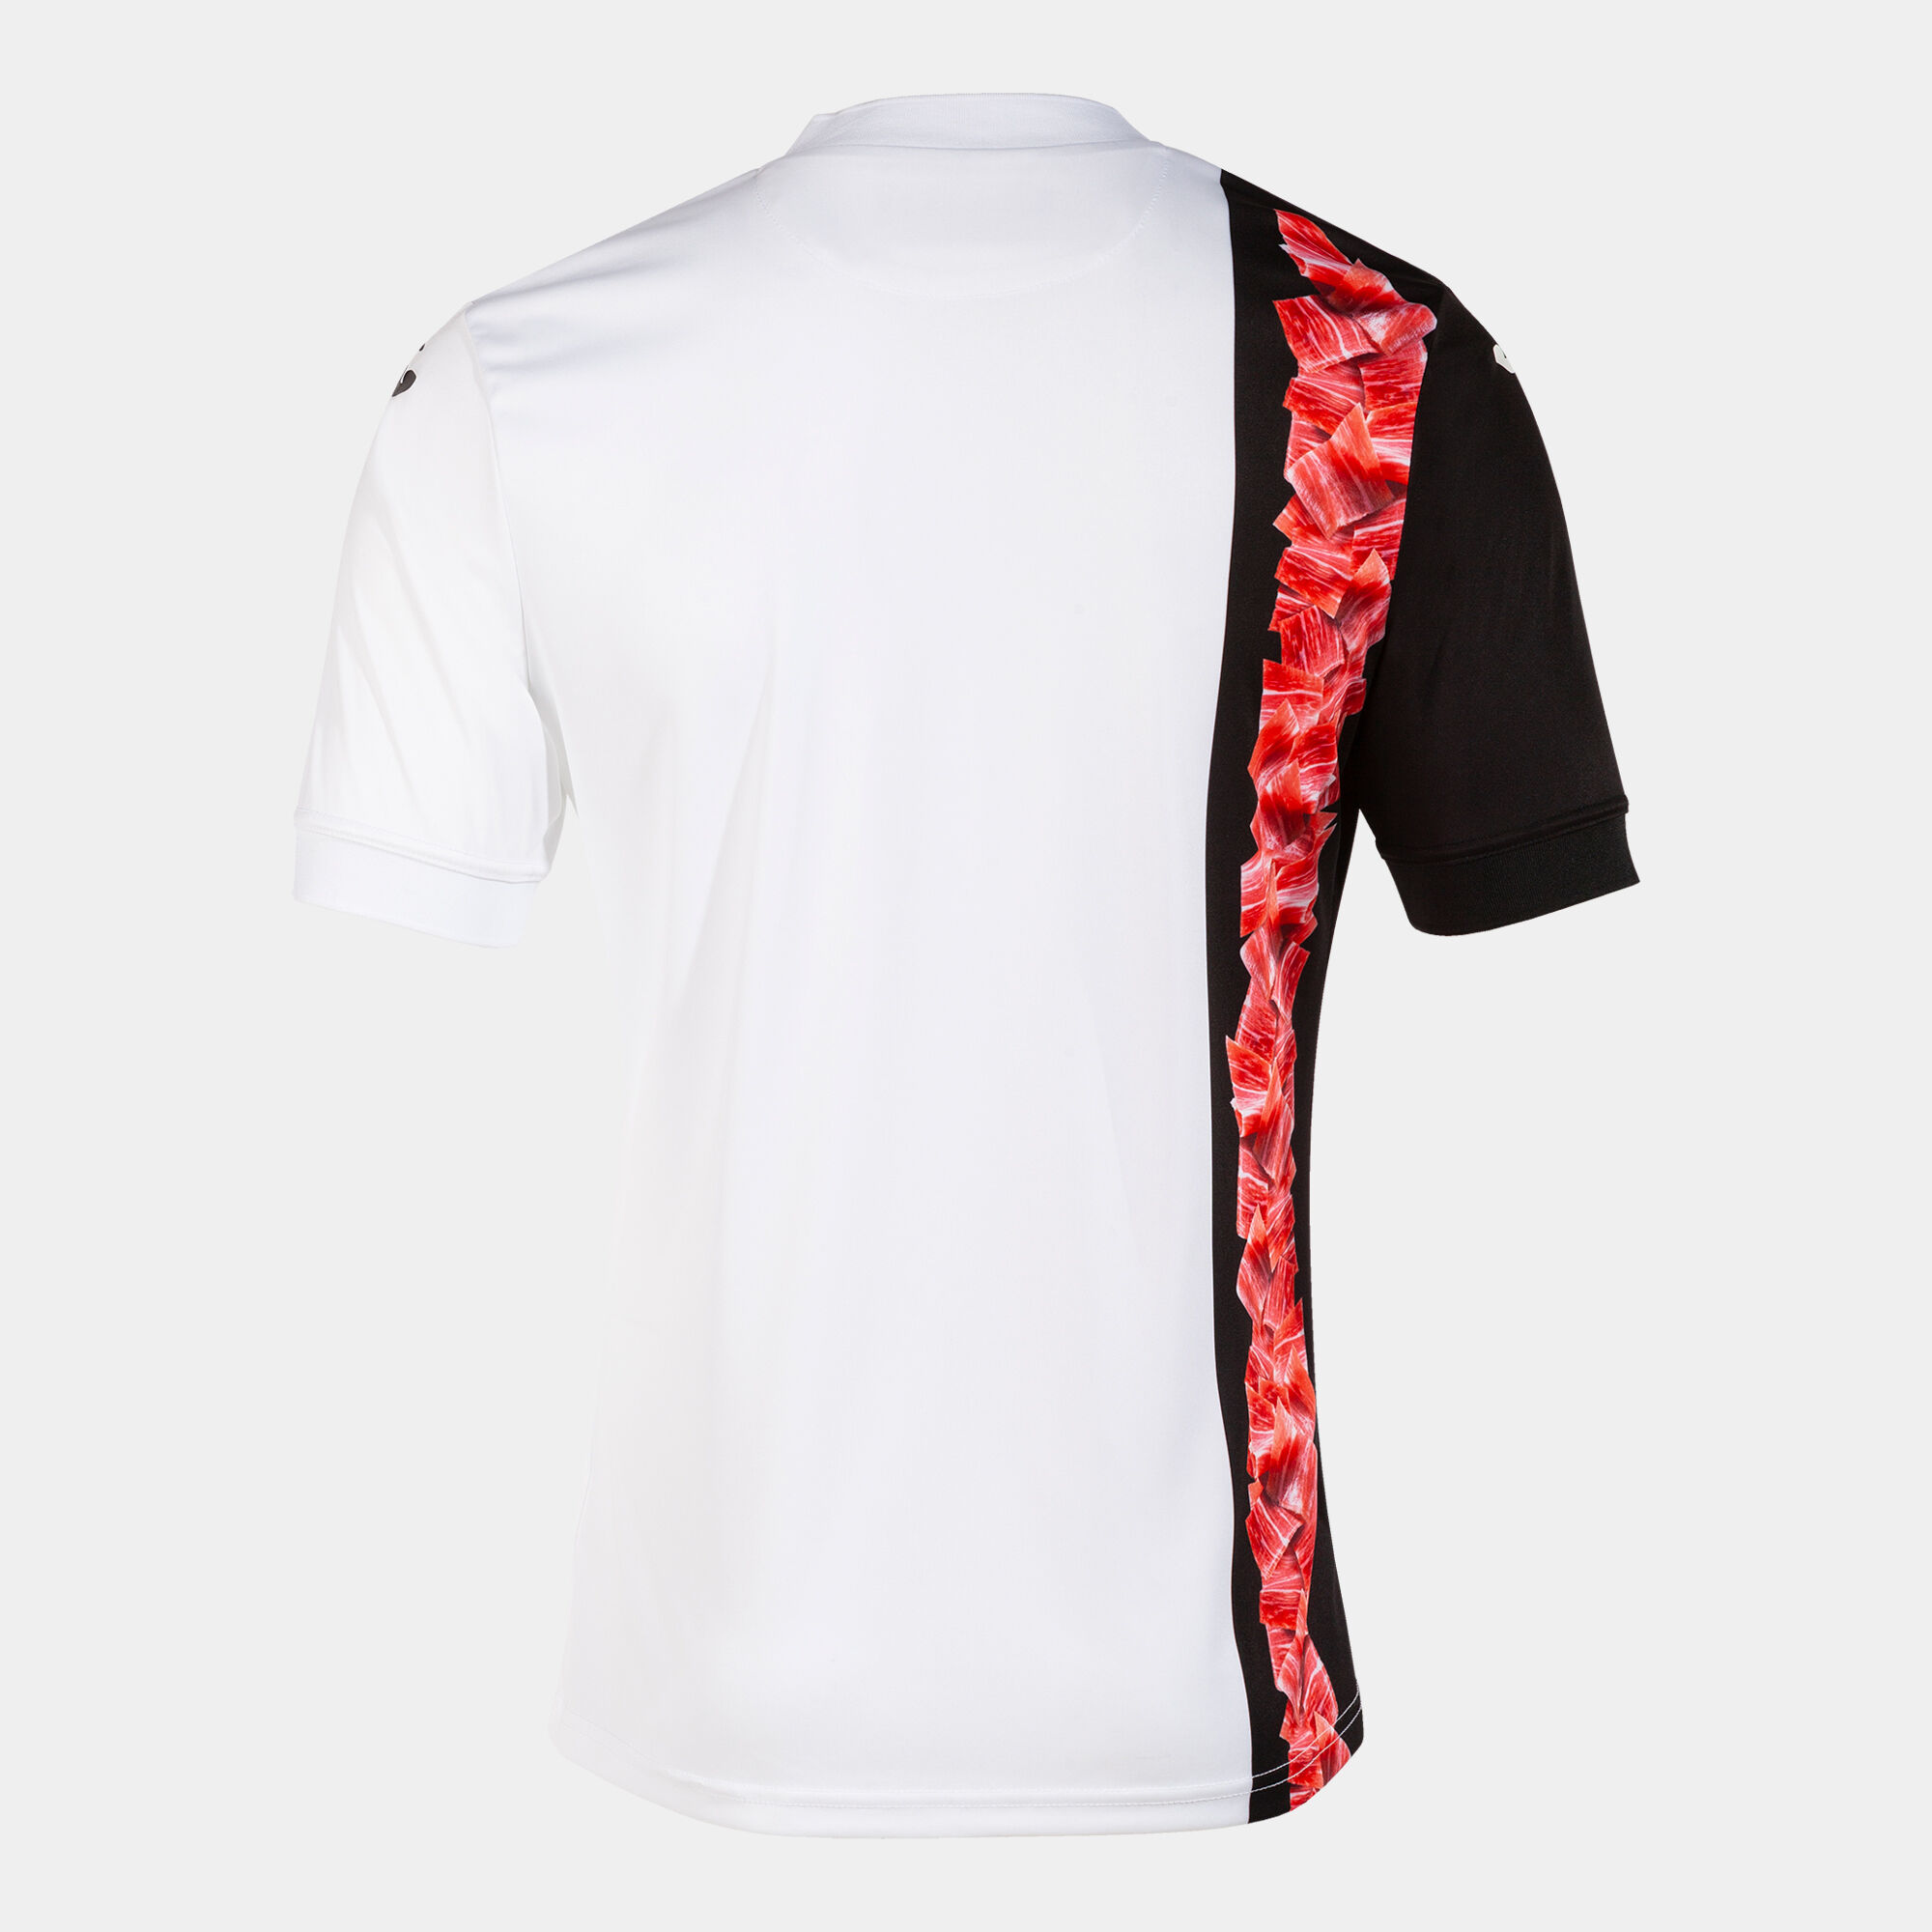 Shirt short sleeve home kit El Pozo 22/23